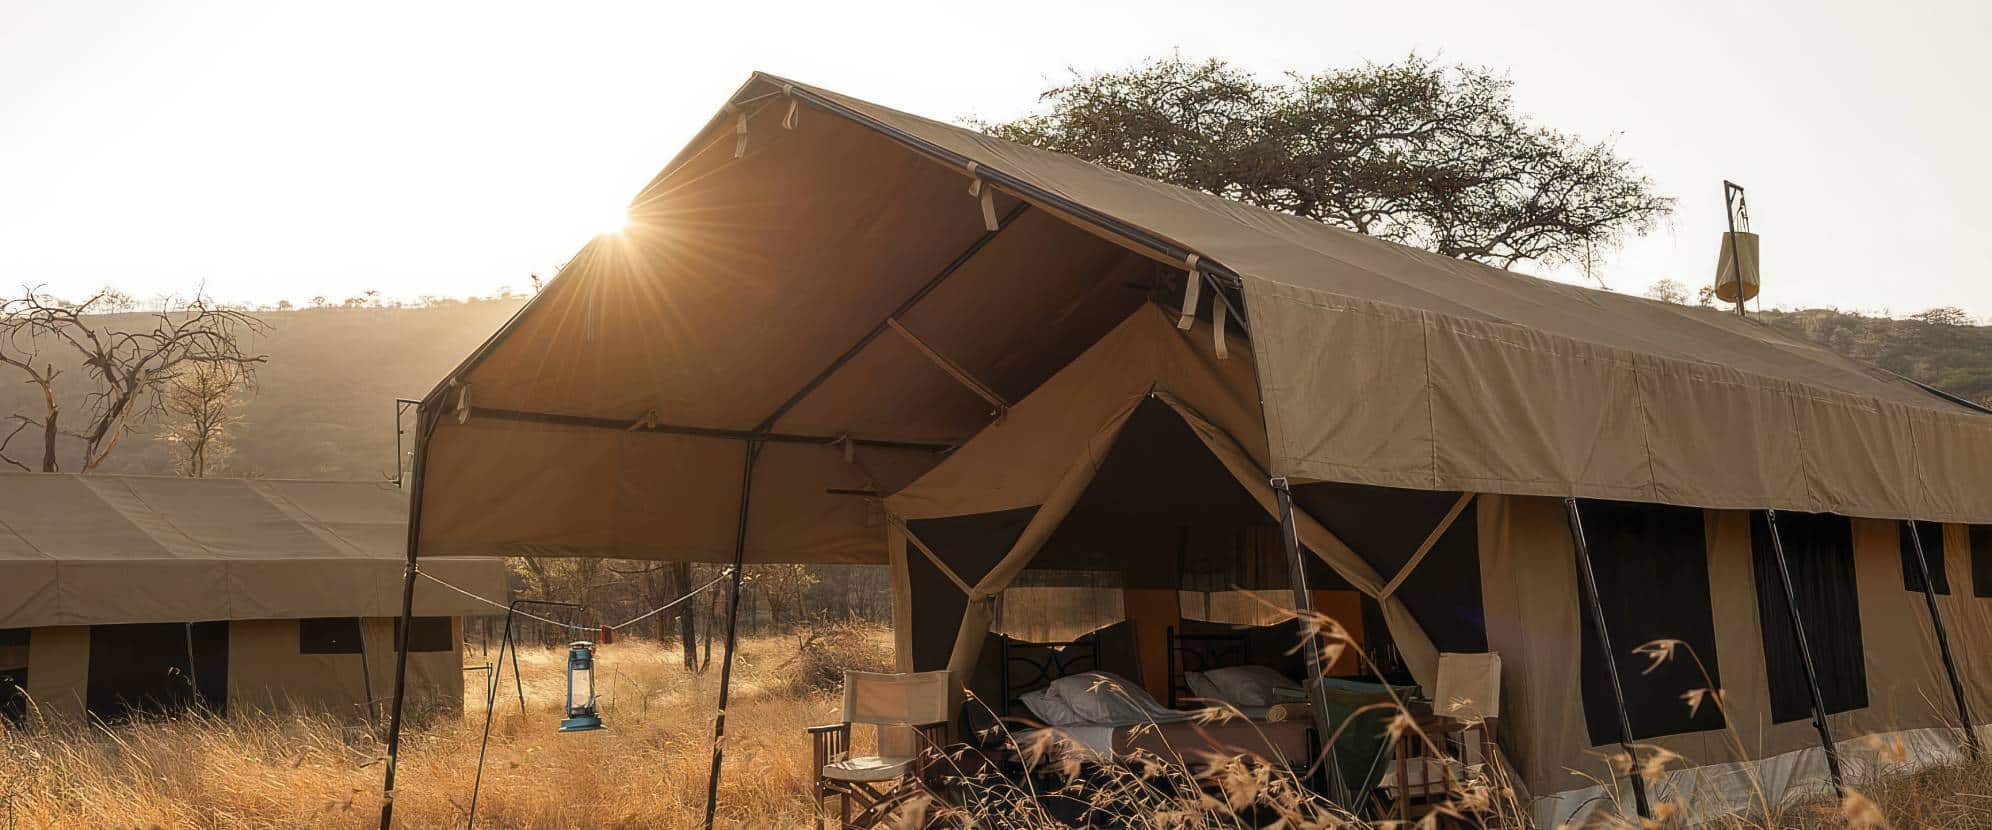 <a href="https://www. Easytravel. Co. Tz/accommodation/ndutu-kati-kati-tented-camp/">camp de tentes ndutu kati kati</a>